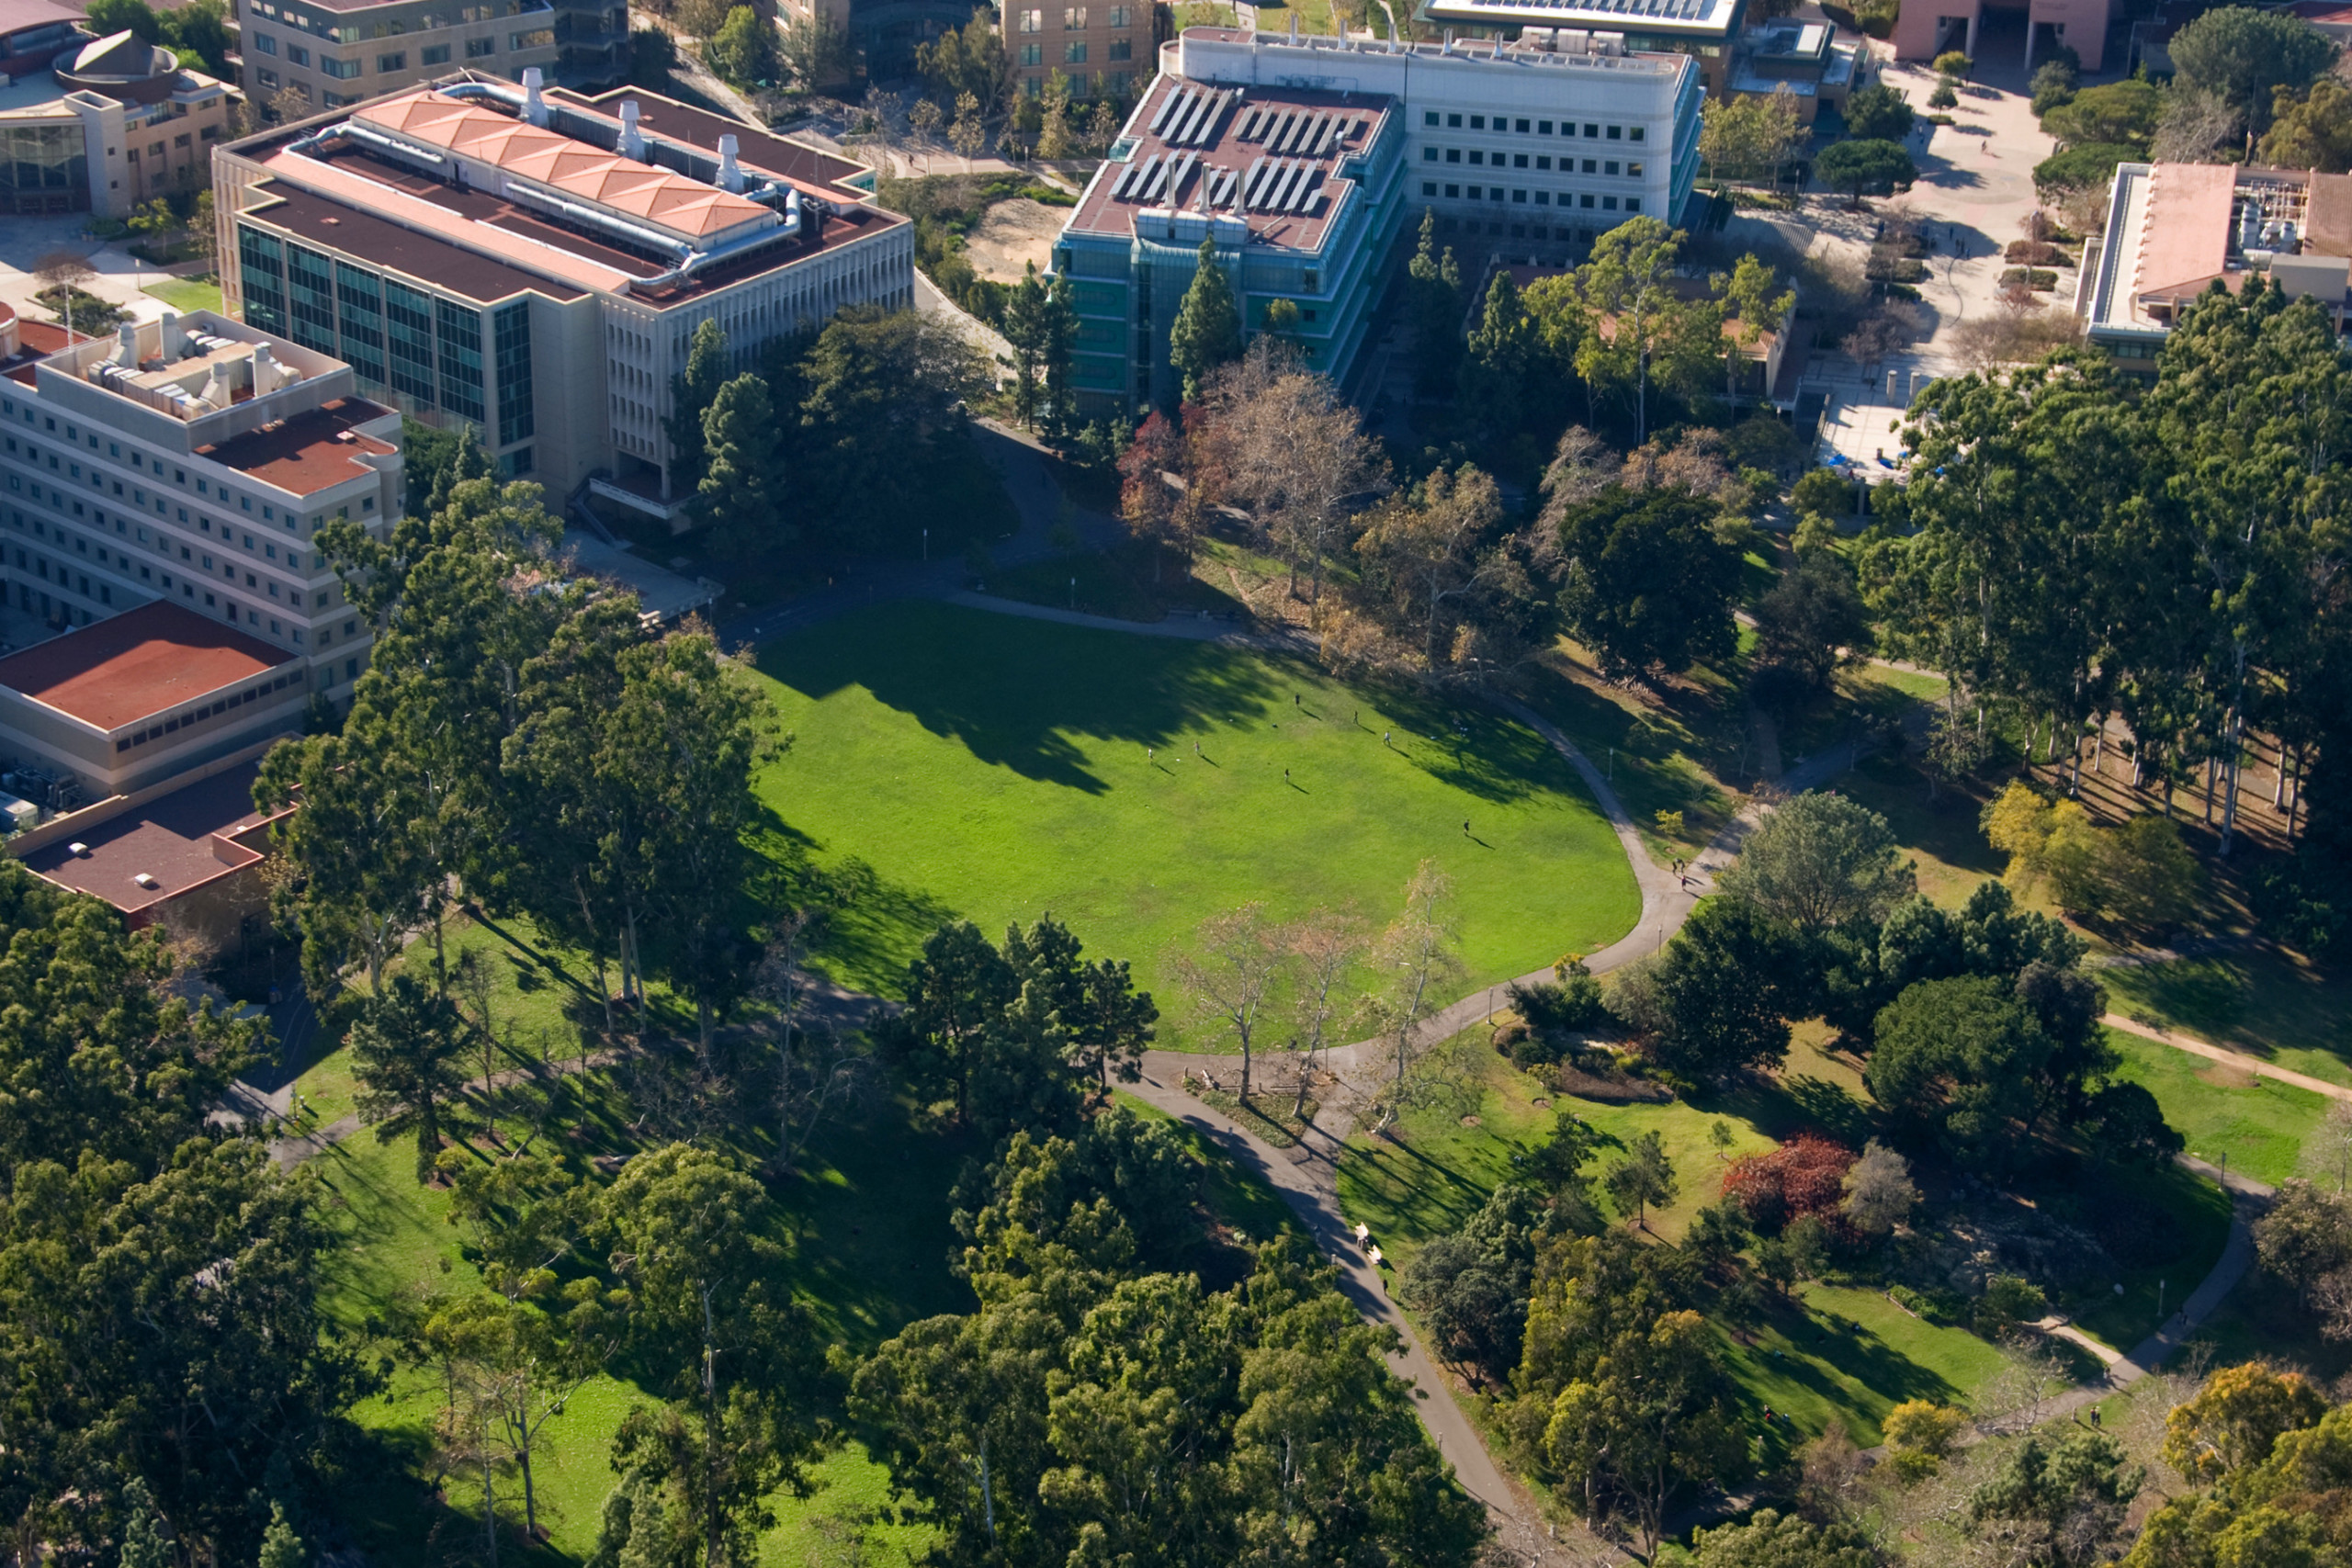 introducing UC Irvine aerial view of Aldrich Park